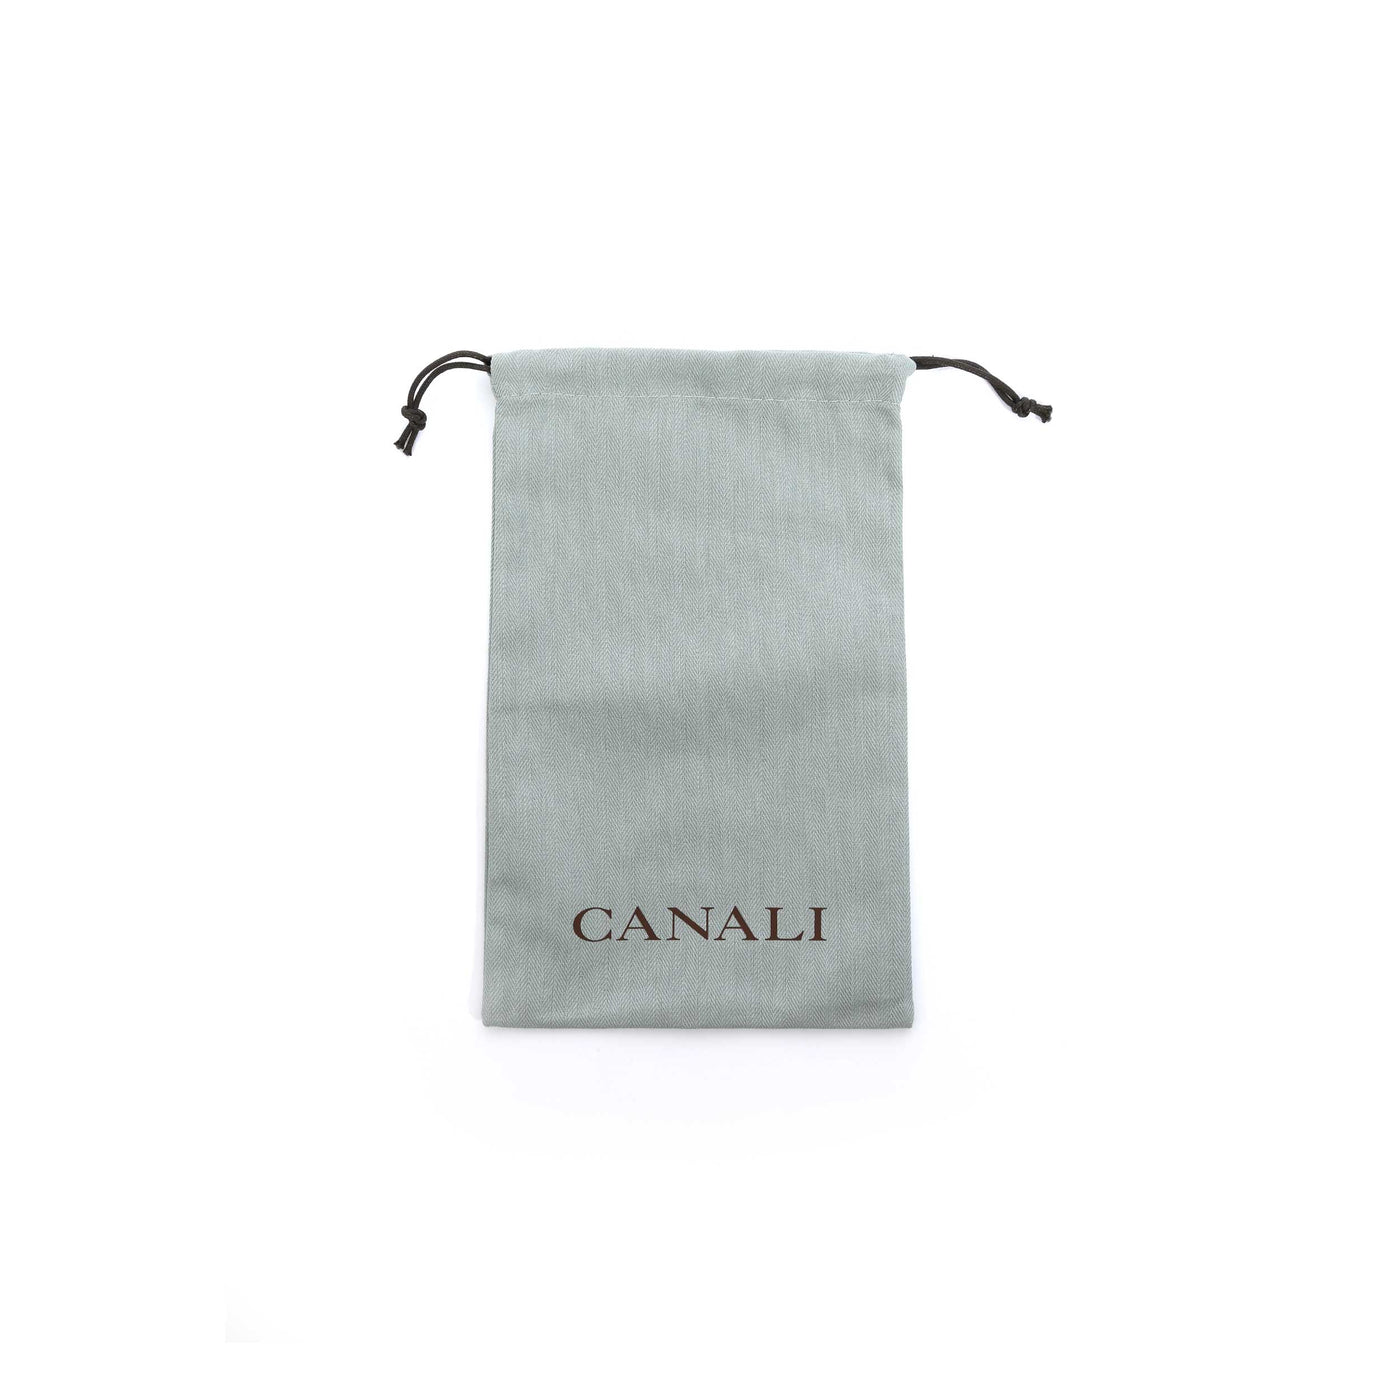 Canali Small Check Print Swim Short in Blue Print Dust Bag